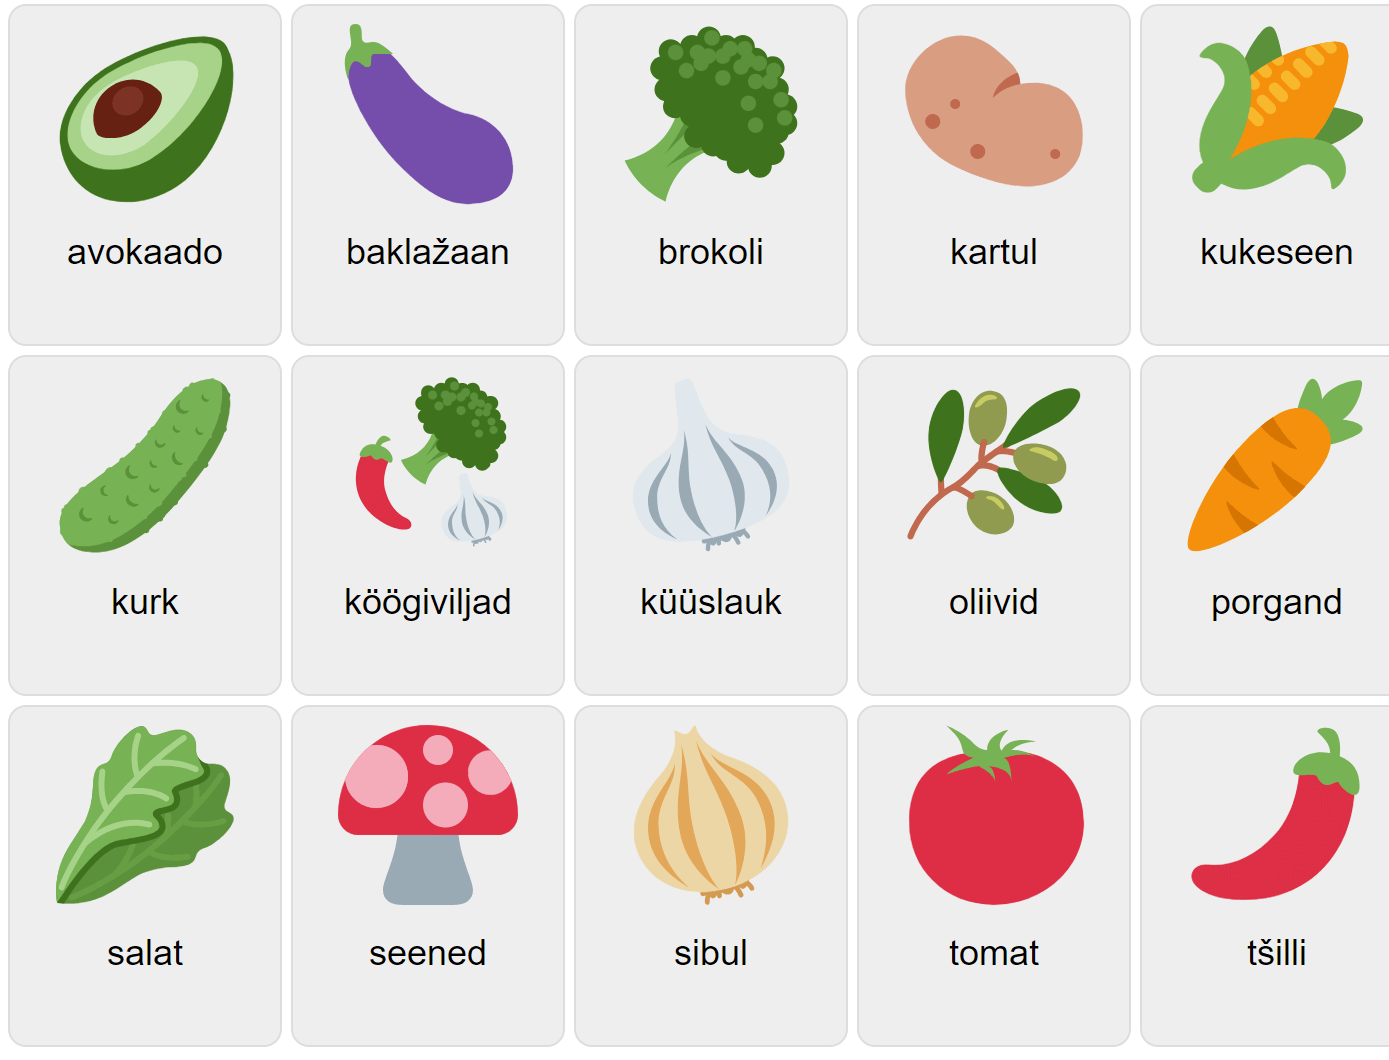 Vegetables in Estonian